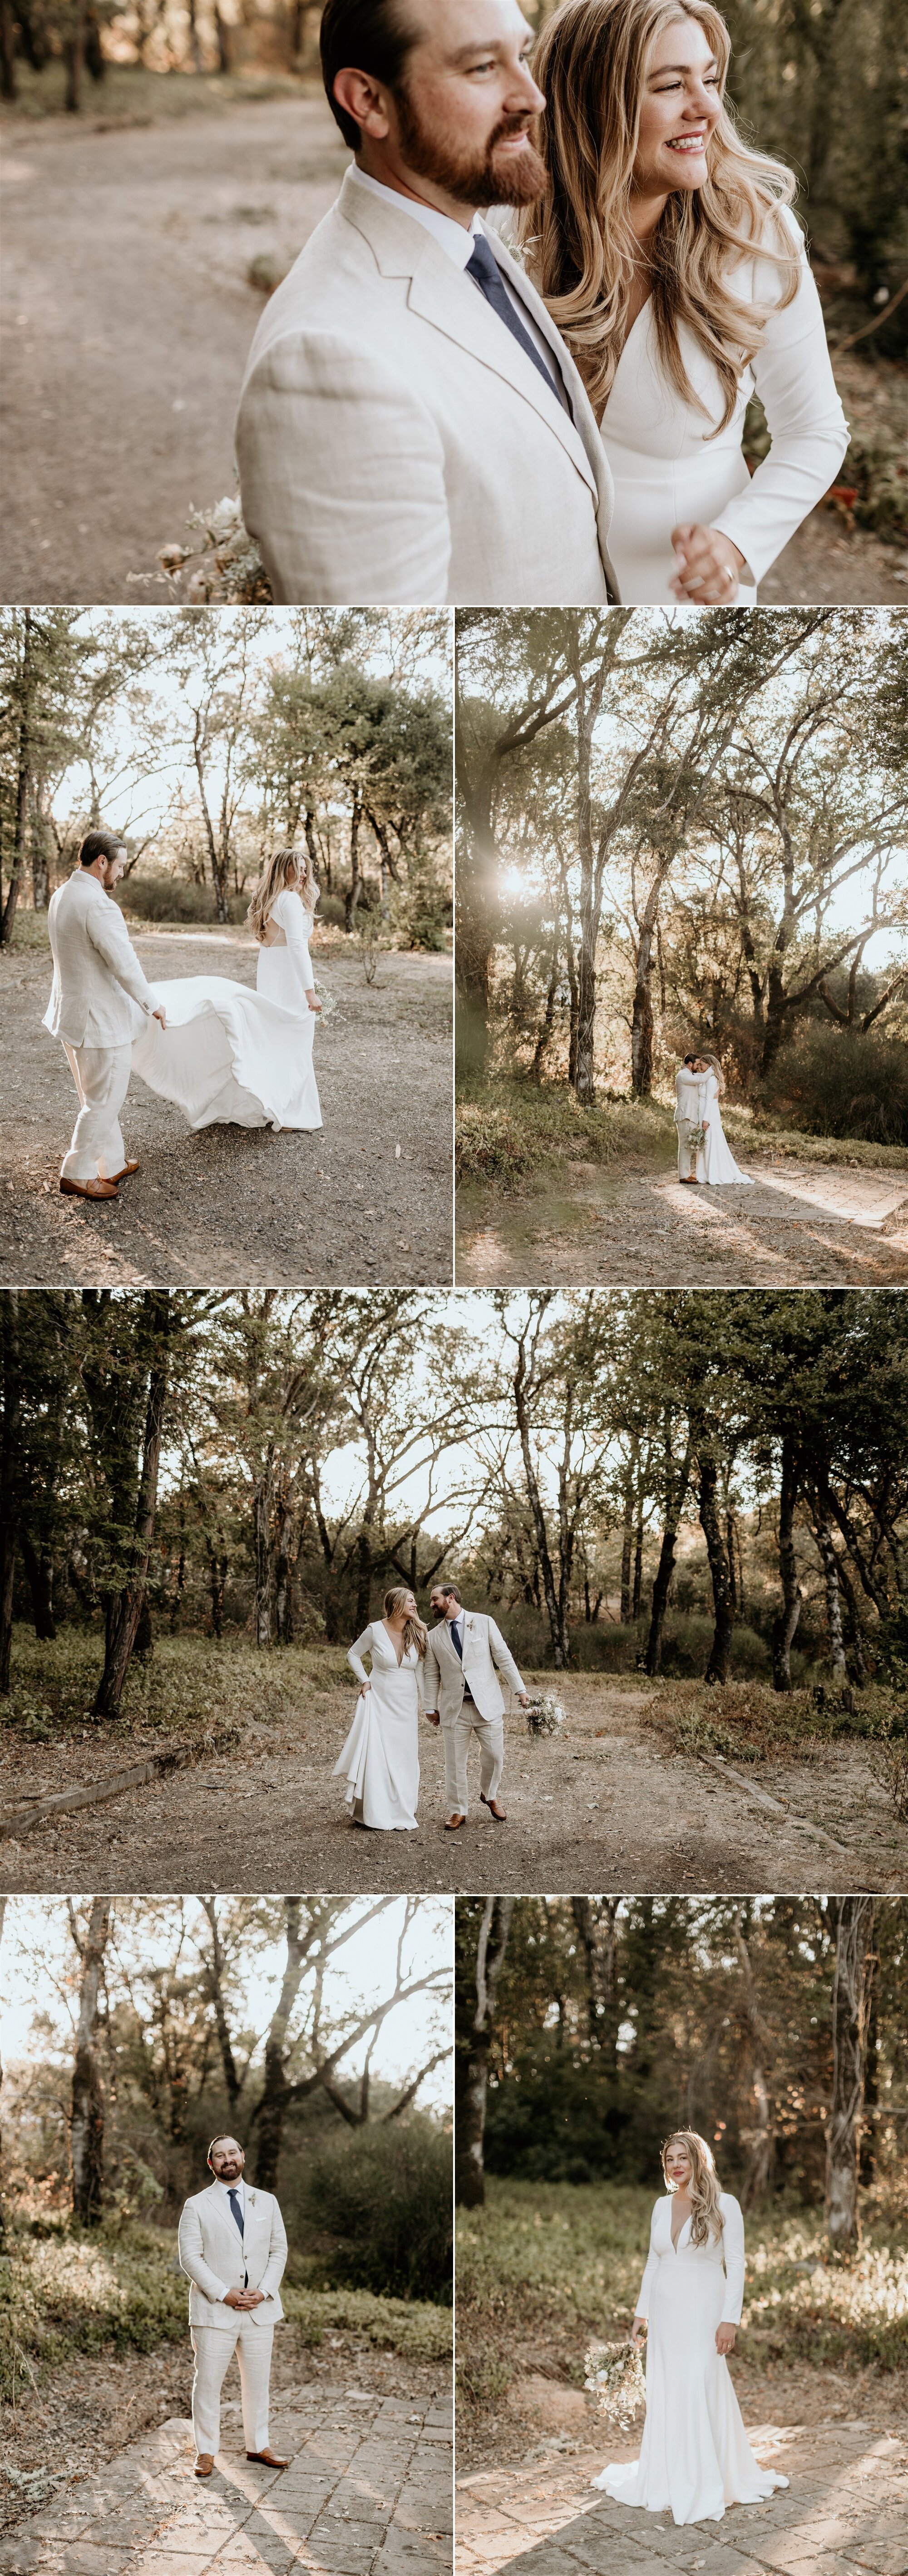 Gretchen Gause Photography | Yokayo Ranch Weekend Getaway Wedding #yokayoranchwedding #campoutwedding #weddingweekend #weddingphotos